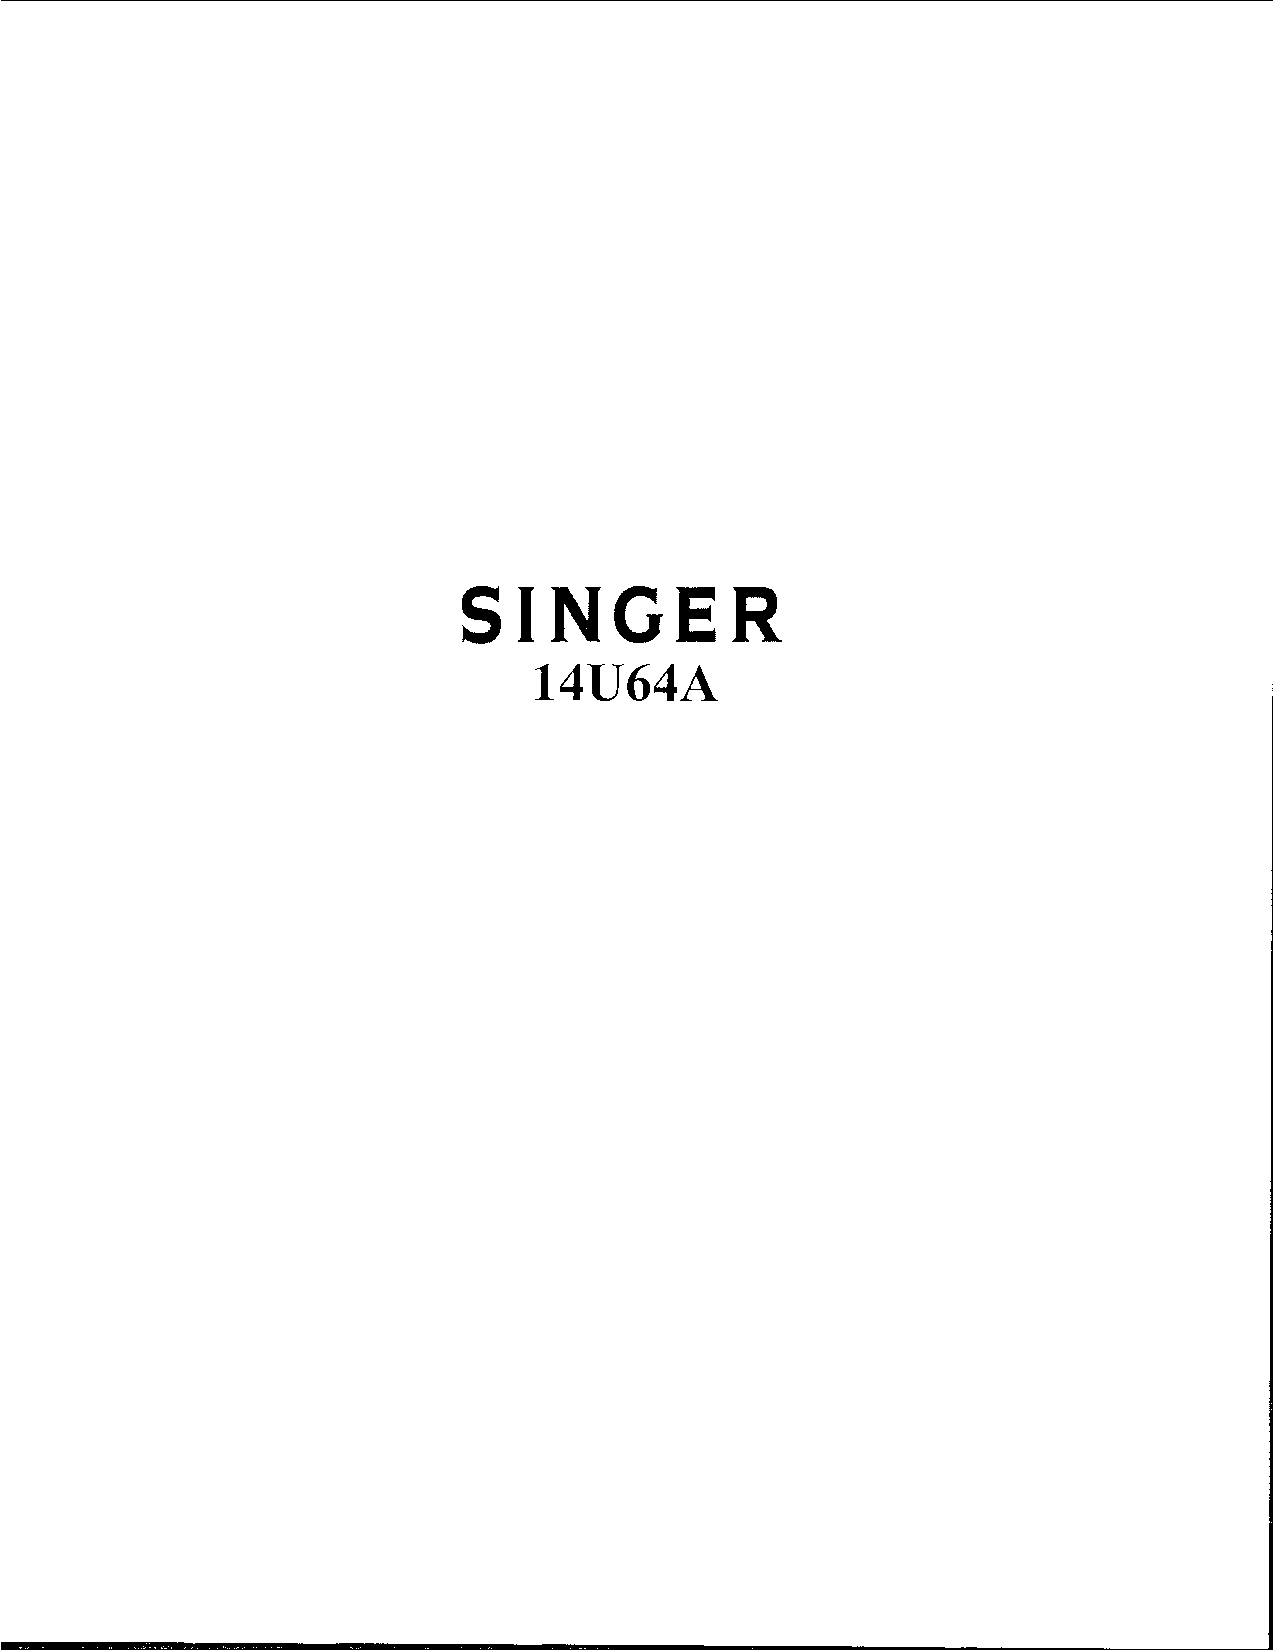 Singer 14U64A User Manual